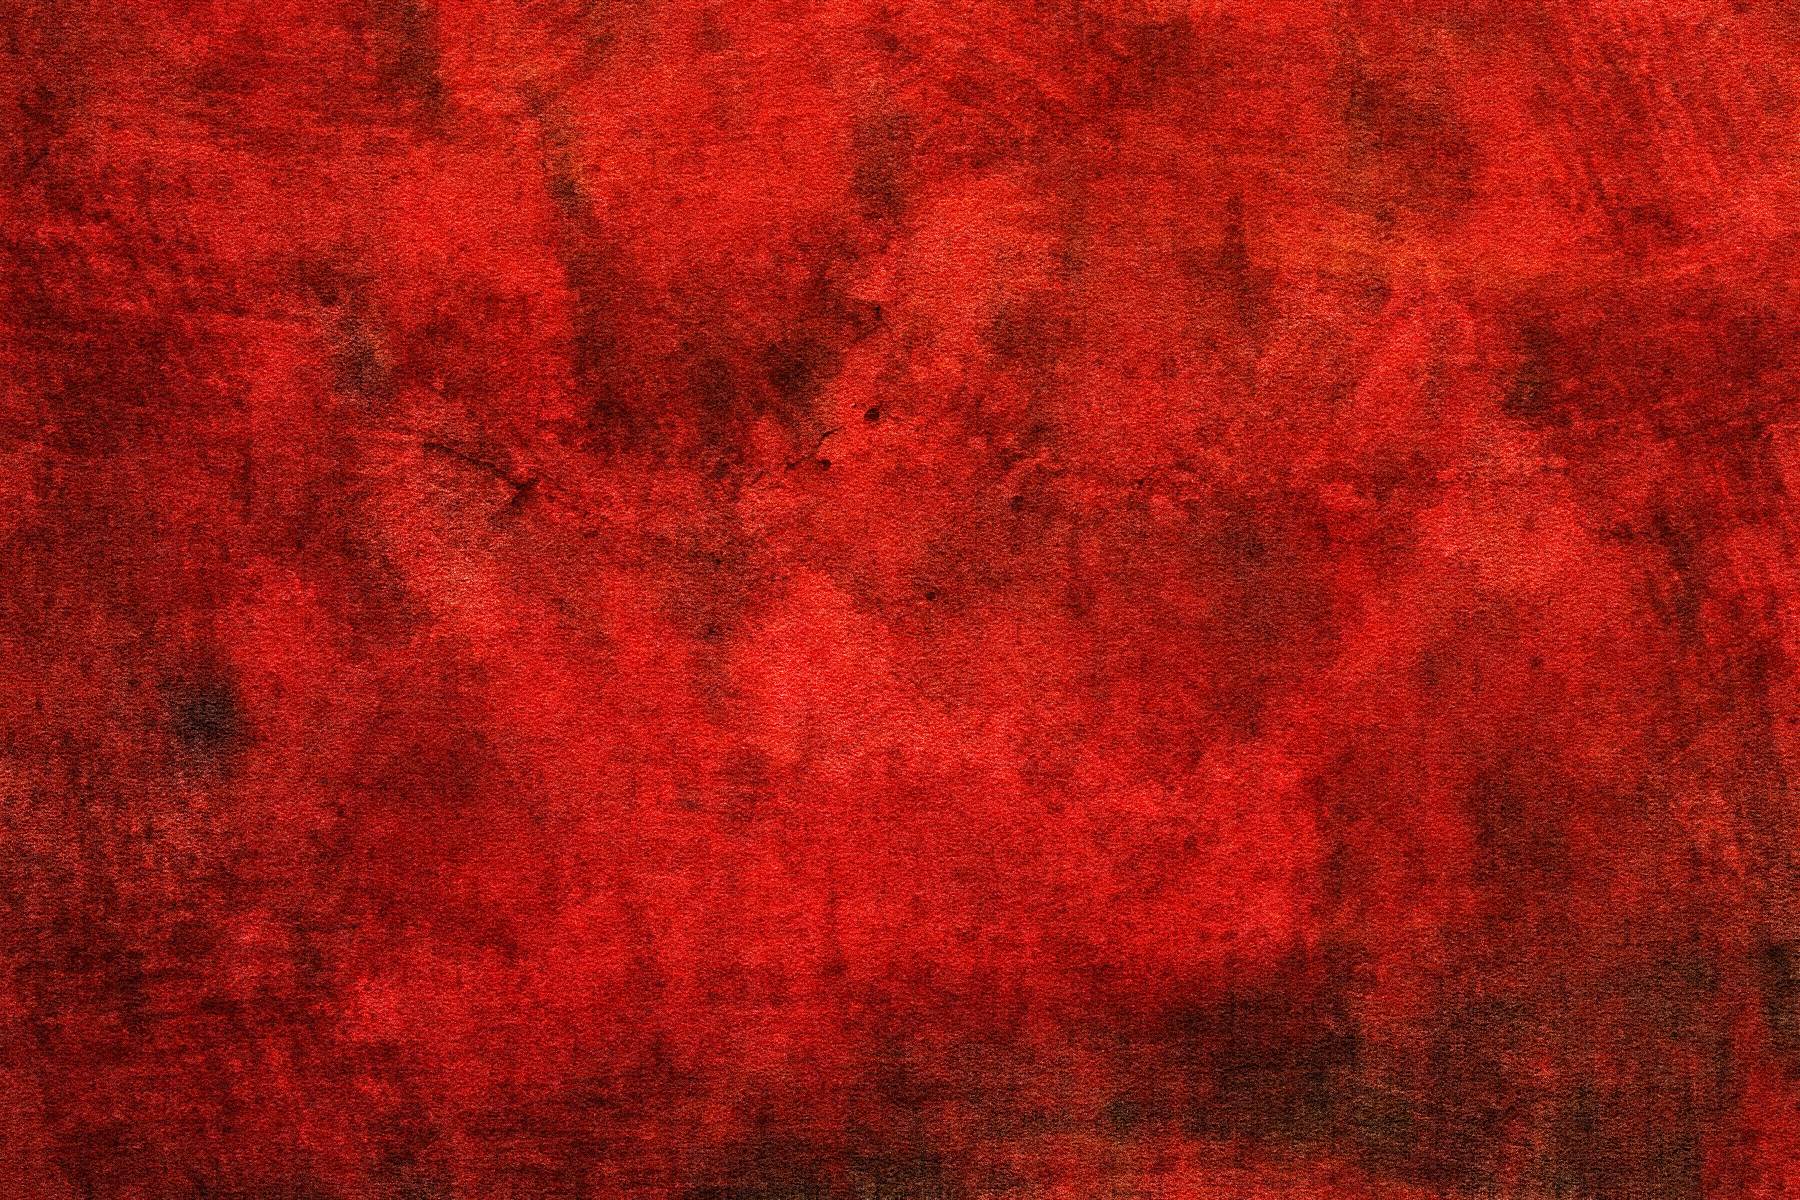 Textured Red Wallpaper